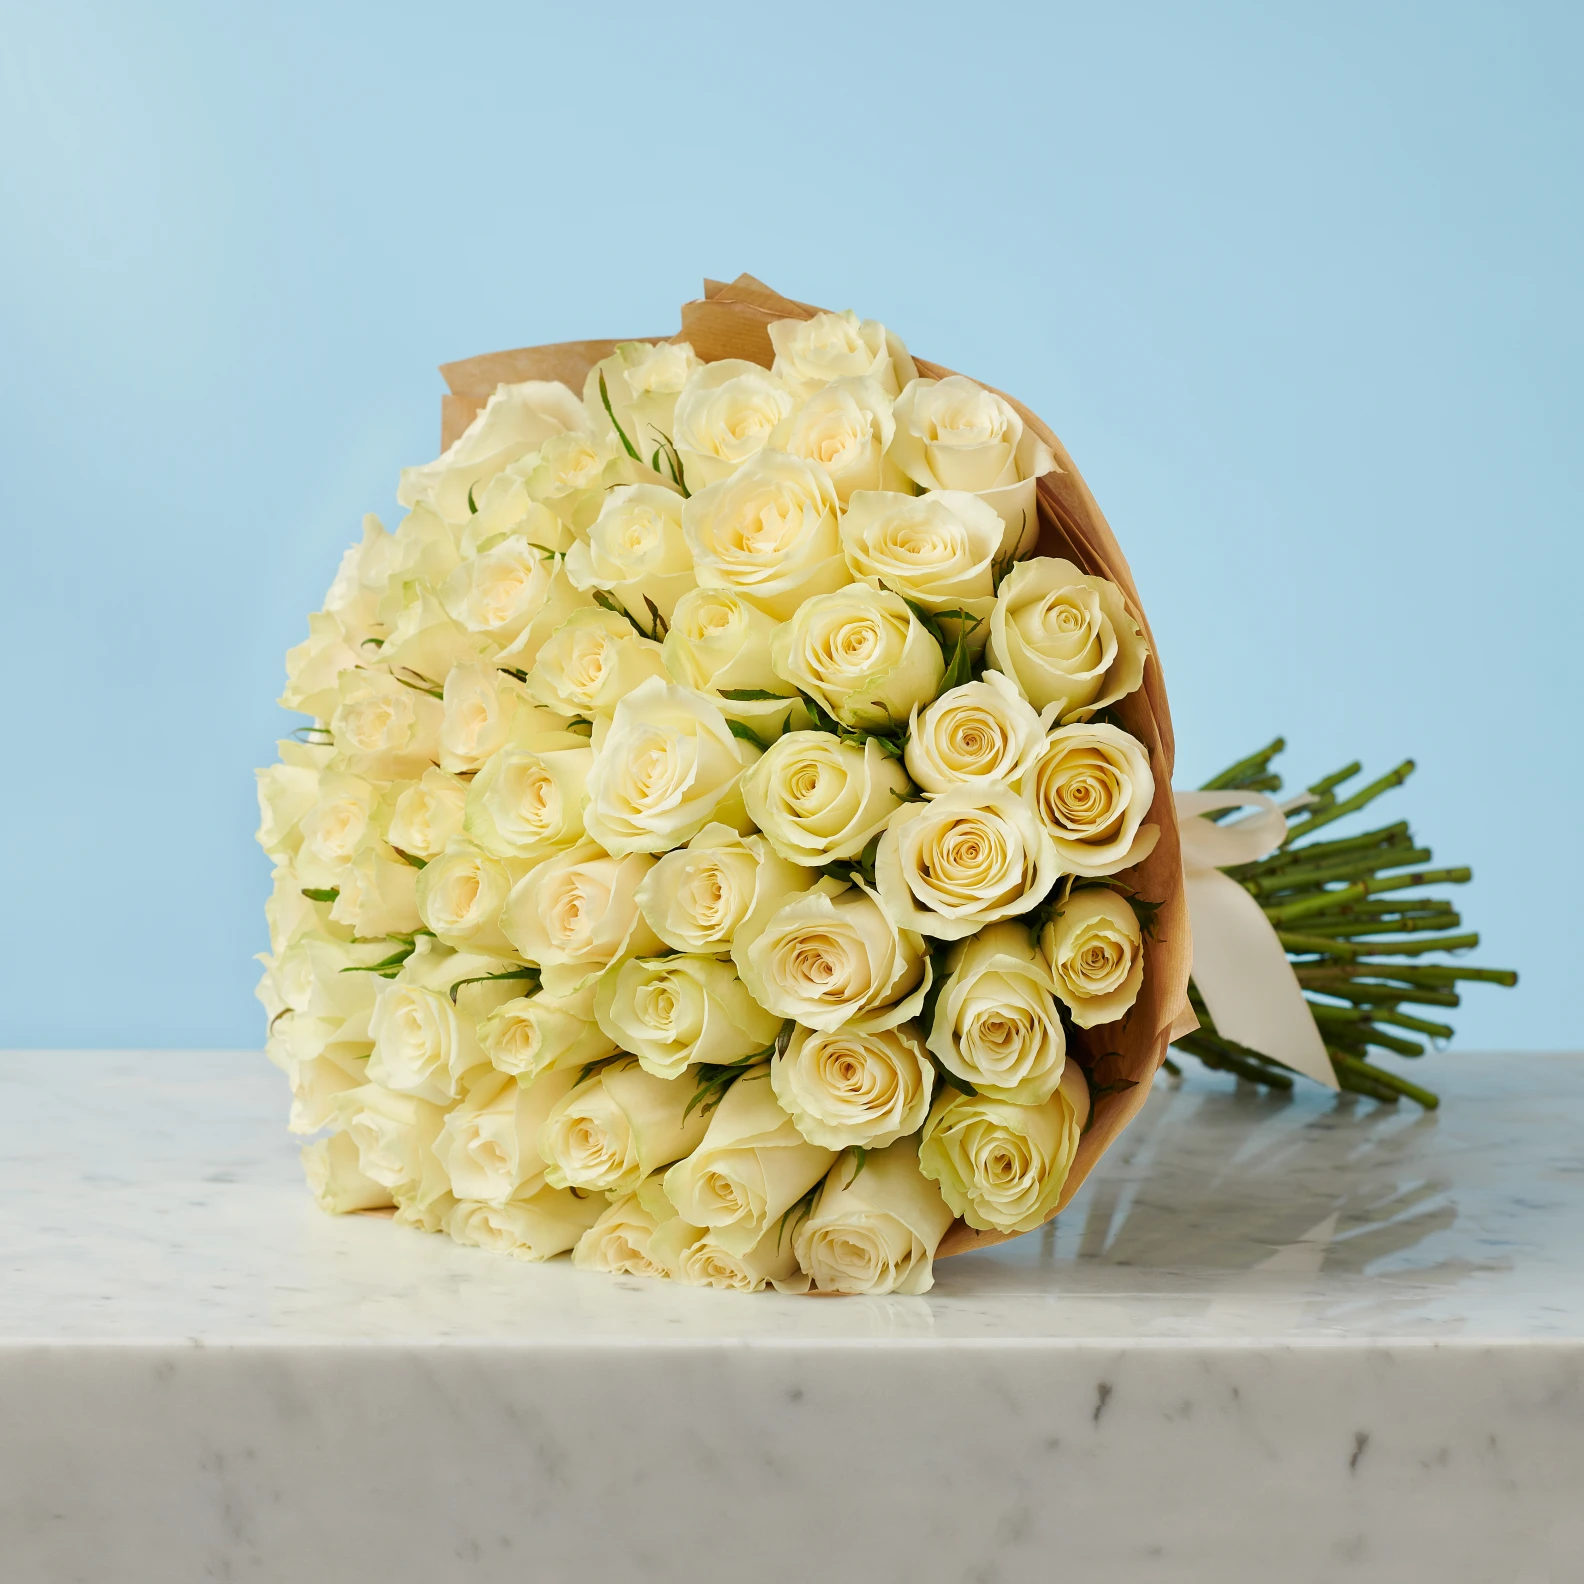 50 White Roses from Kenya - image №4